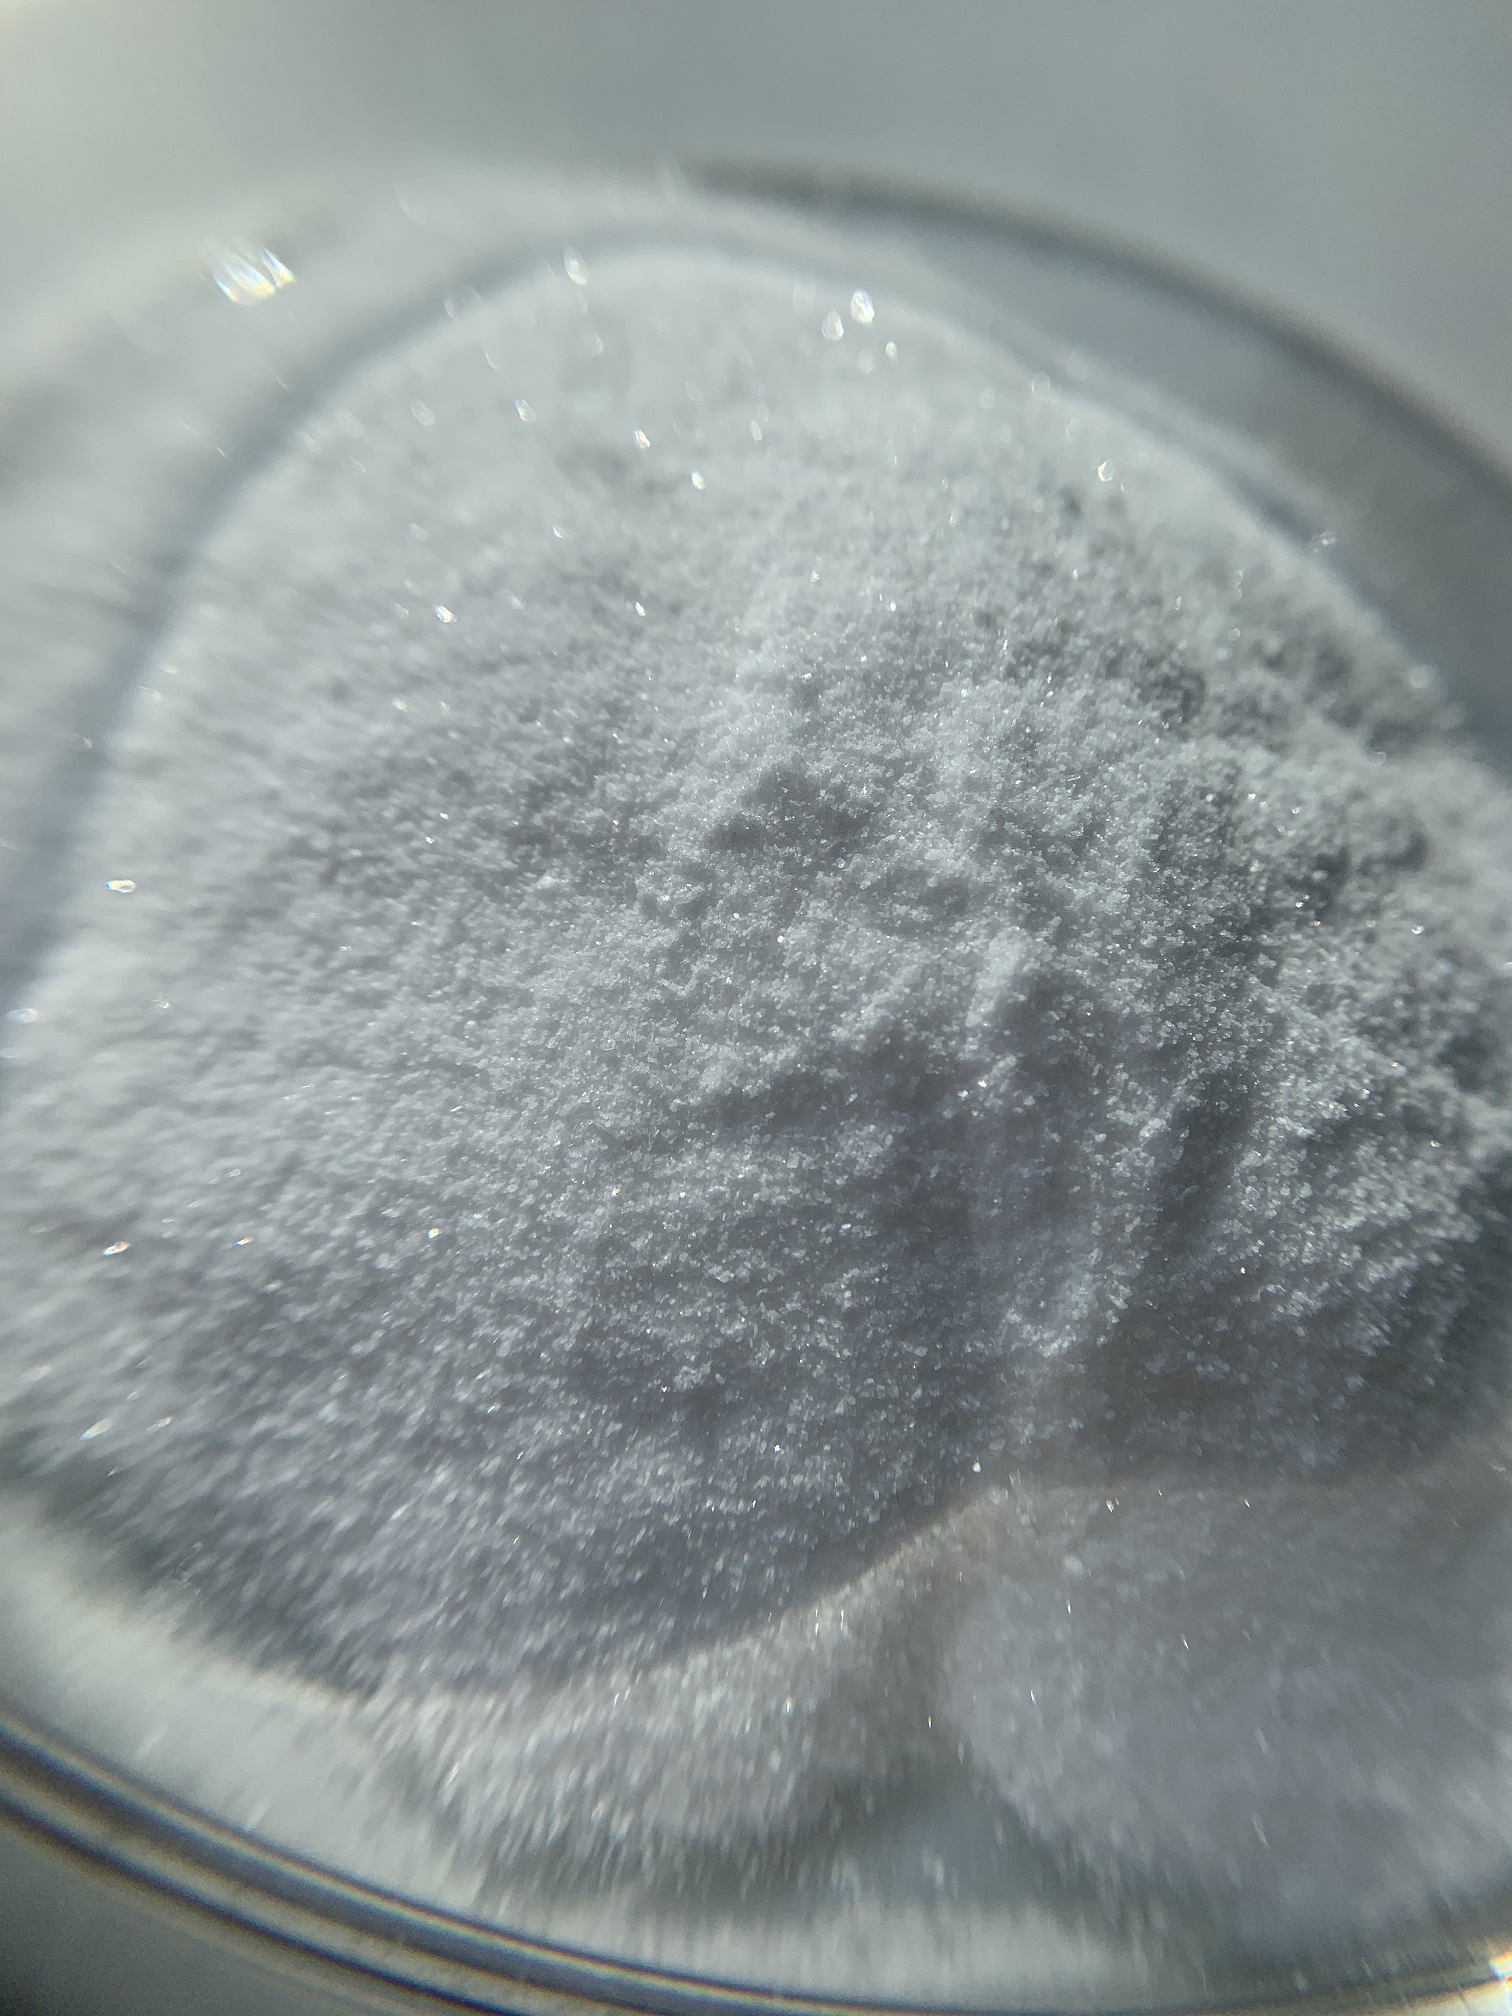 Phenacetin Powder (shiny/ Matt) CAS: 62-44-2